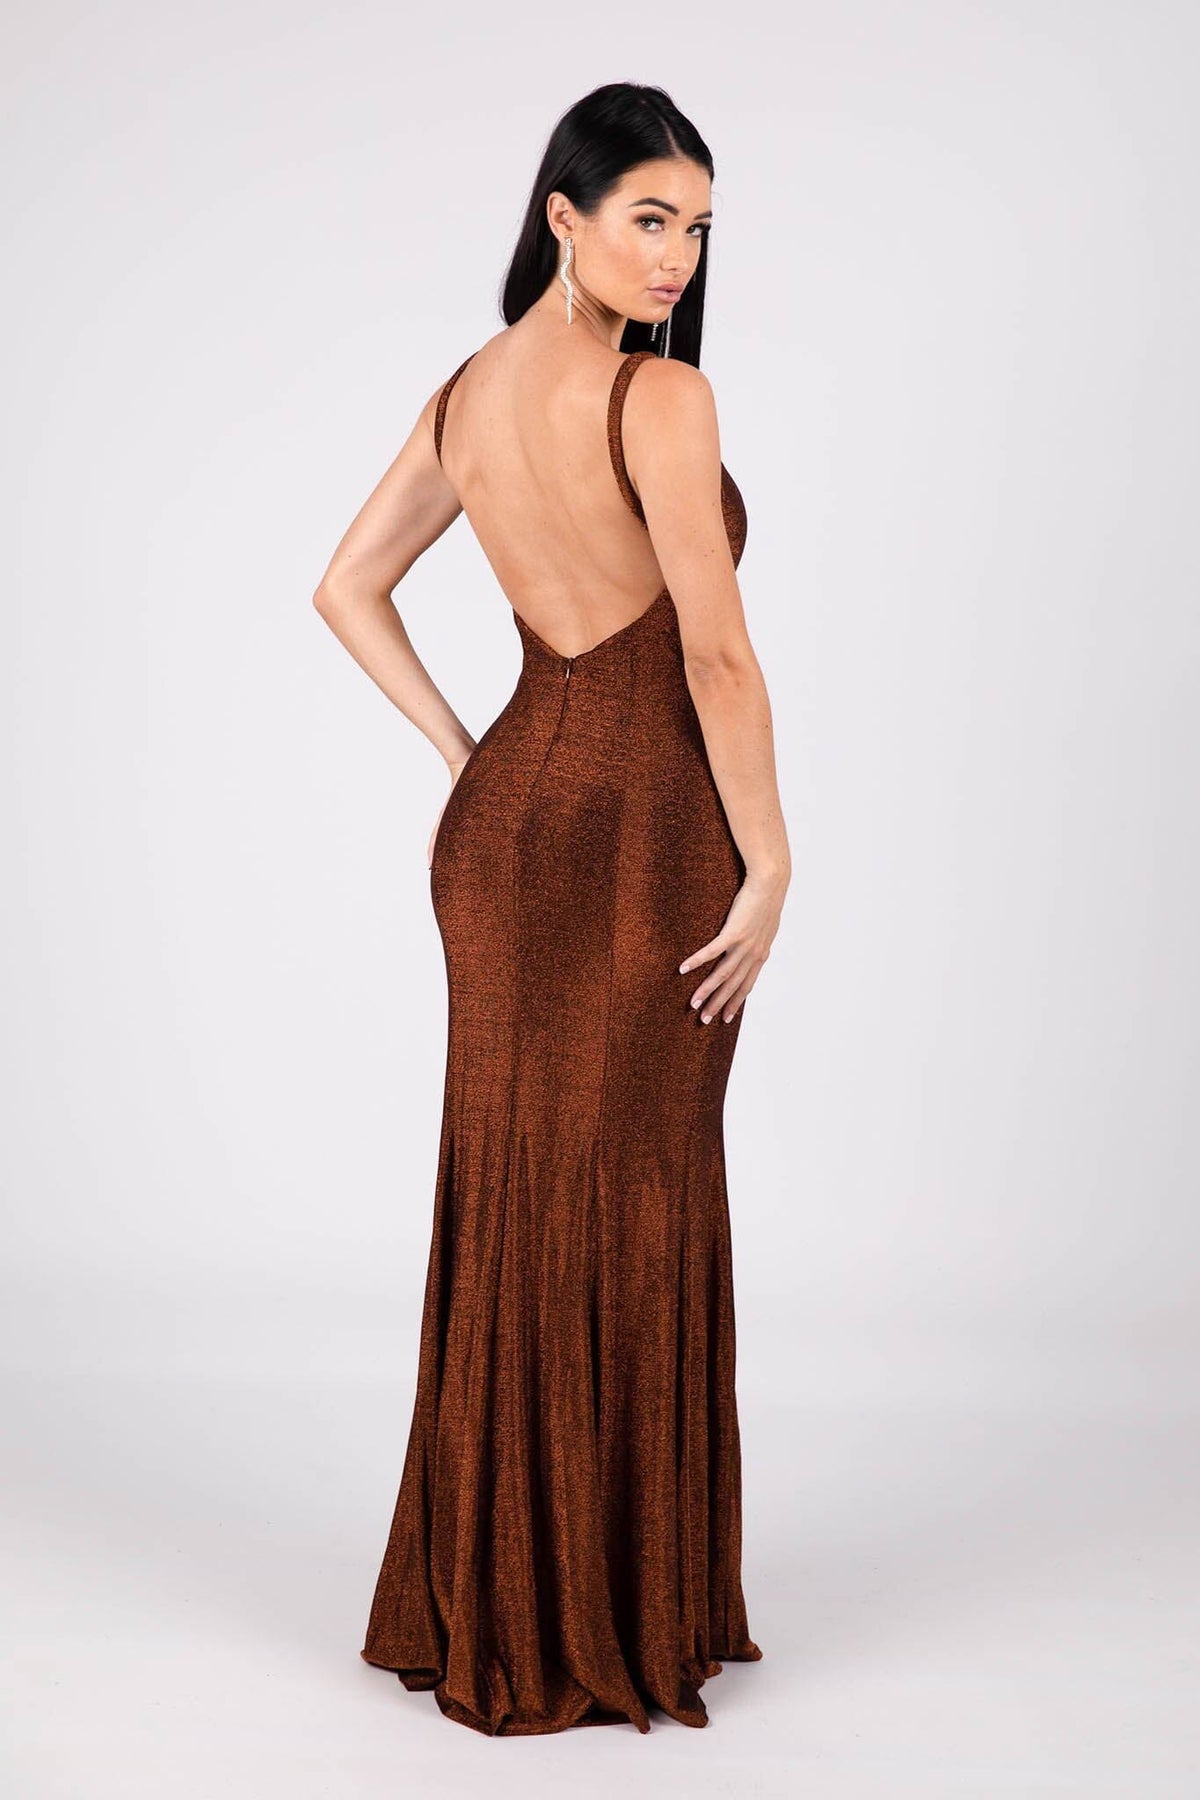 V Backless Design of Shimmer Copper Rust Coloured Floor Length Fitted Evening Gown with V Neckline